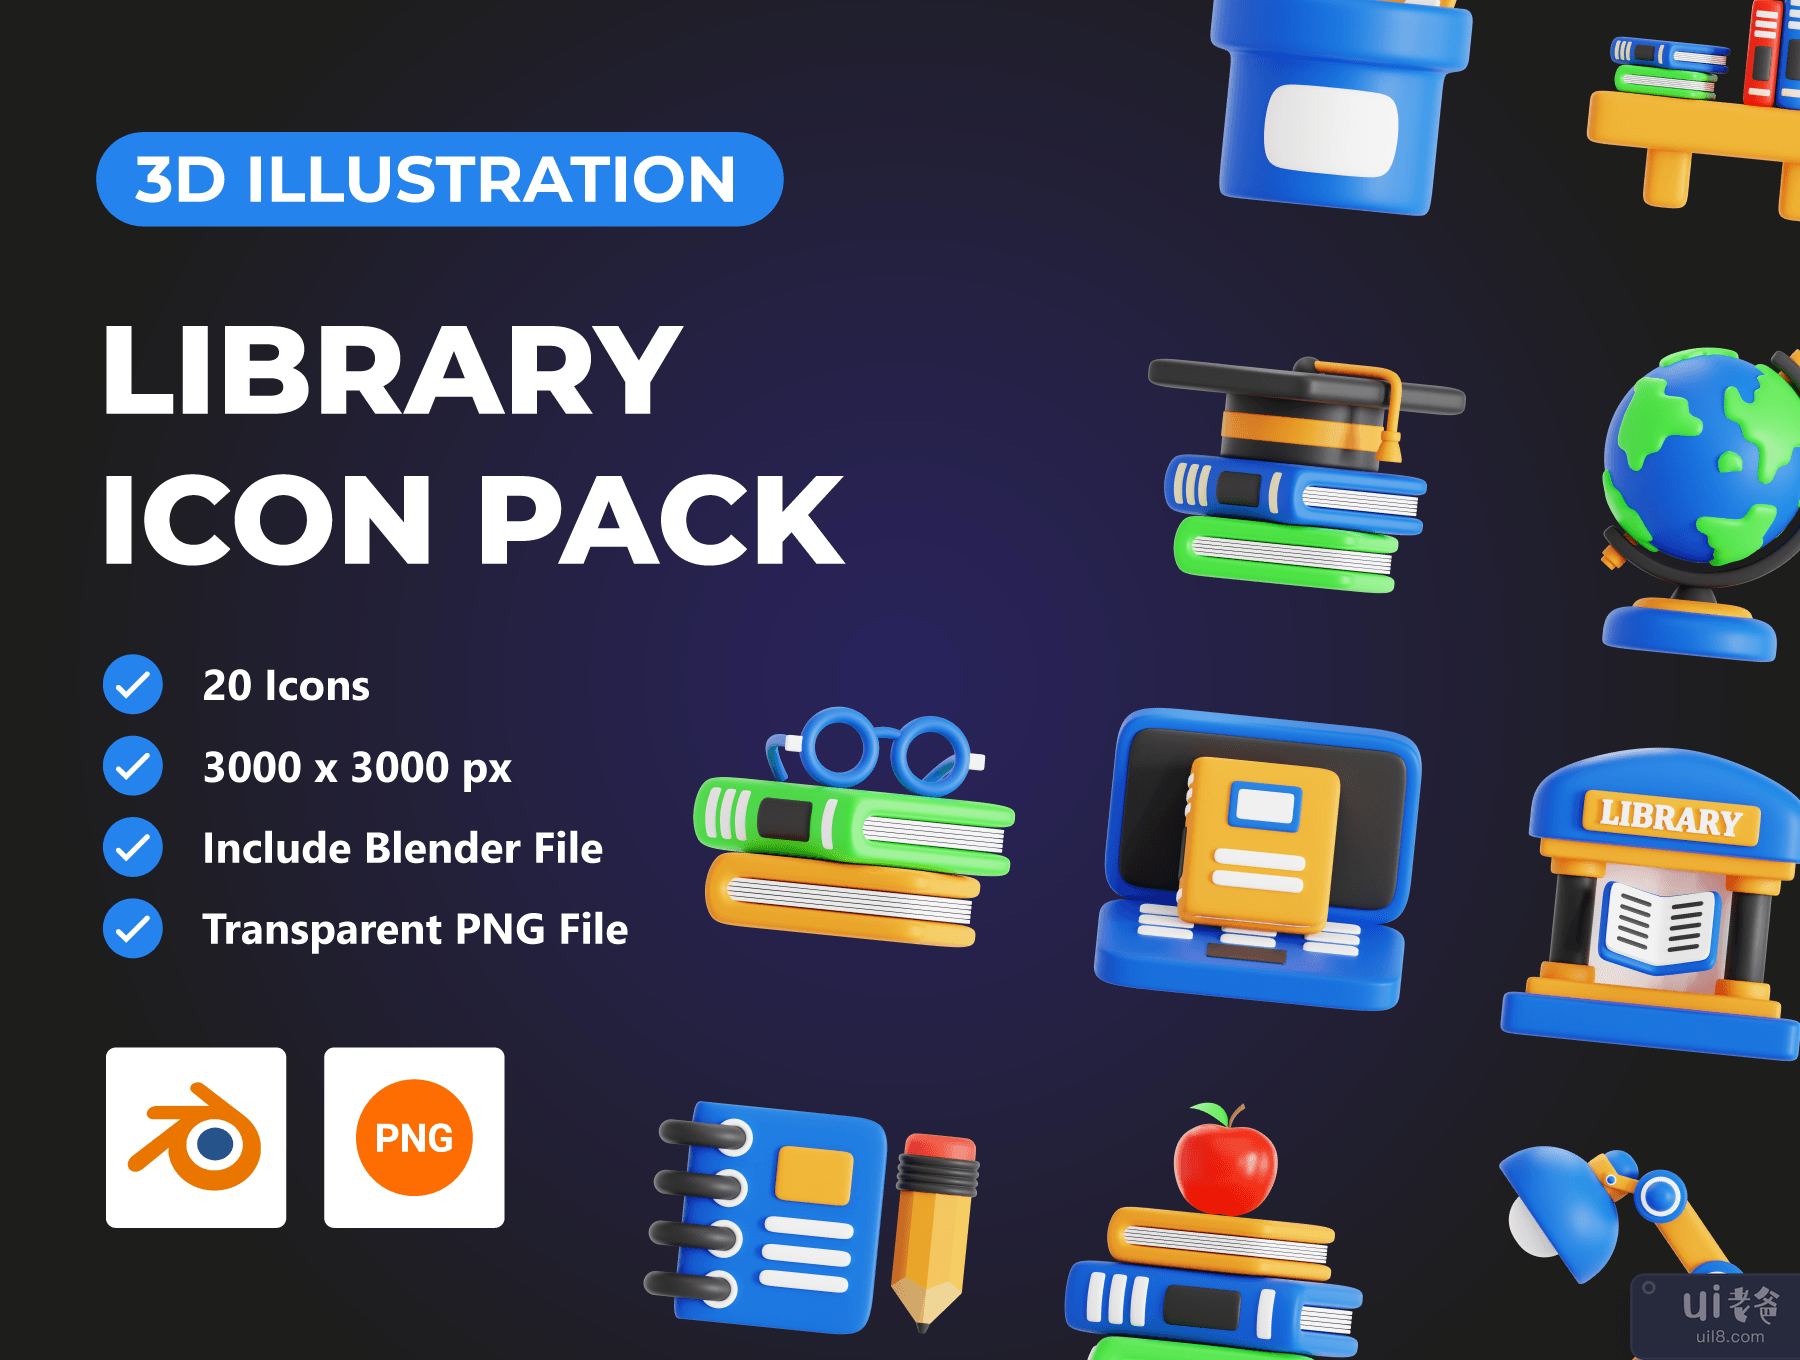 图书馆 3D 图标包 (Library 3D Icon Pack)插图5